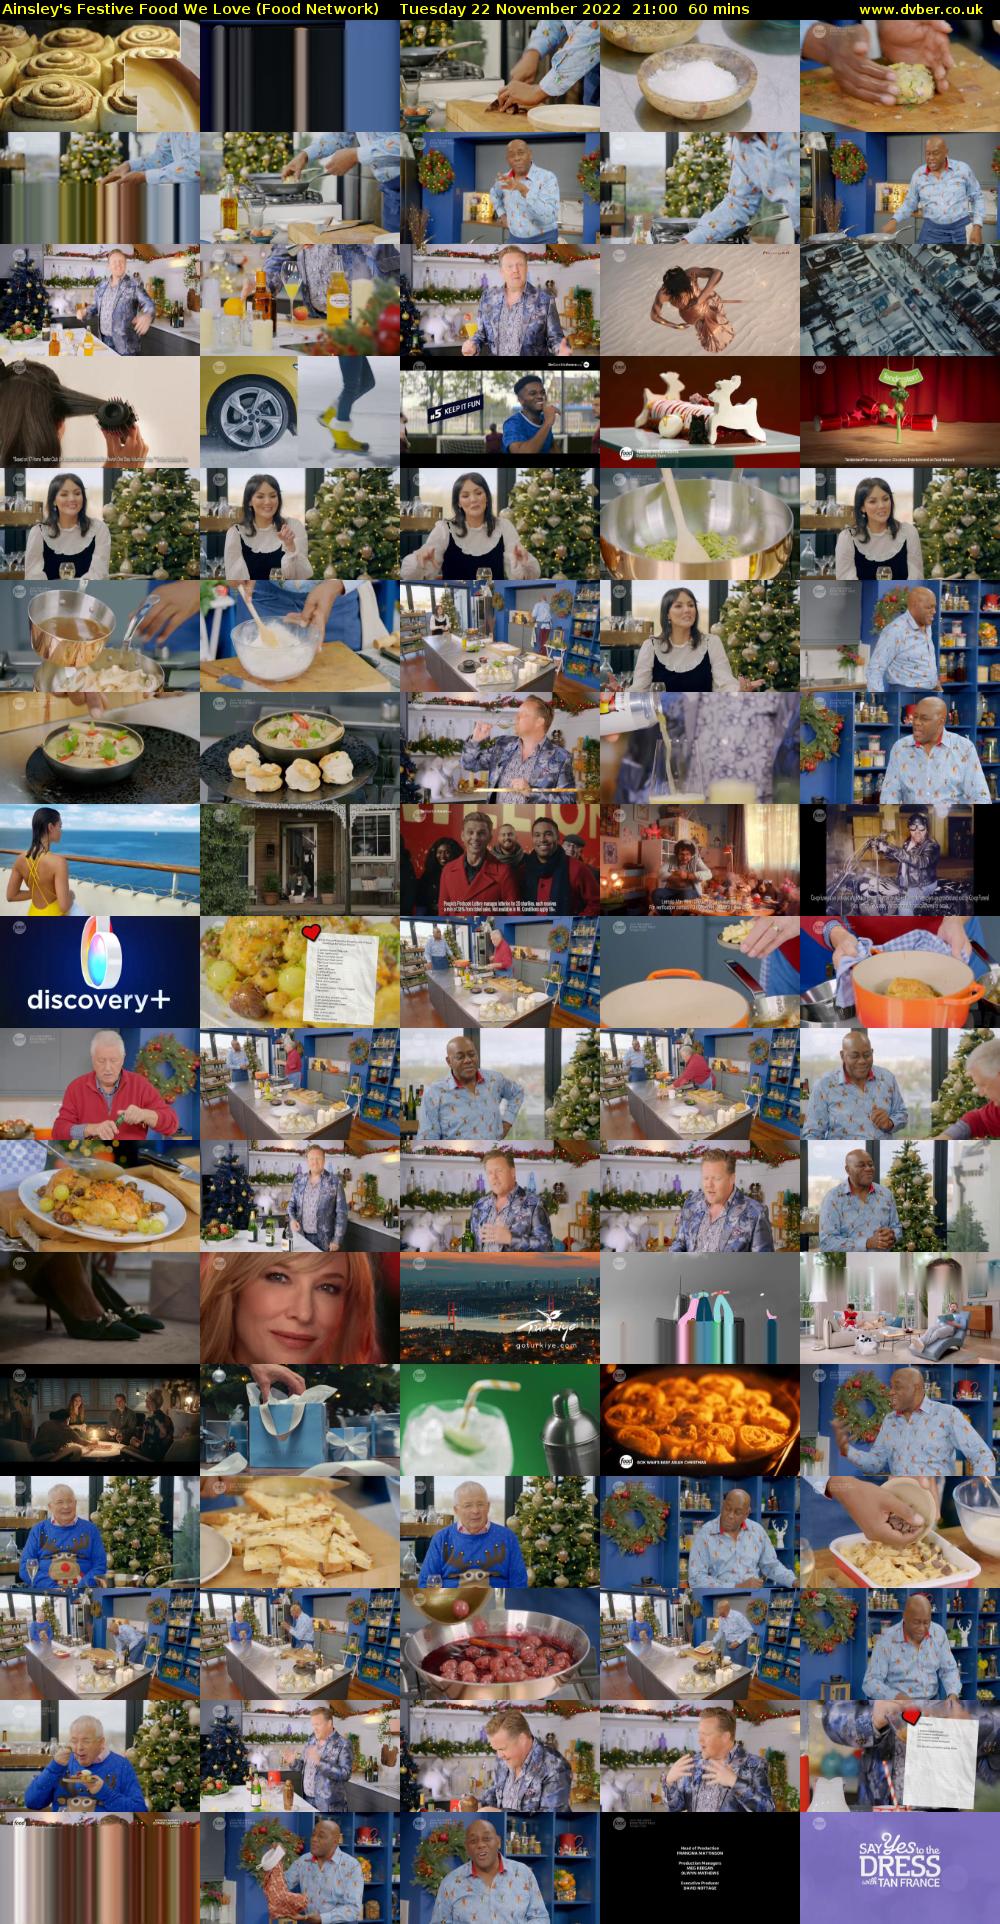 Ainsley's Festive Food We Love (Food Network) Tuesday 22 November 2022 21:00 - 22:00